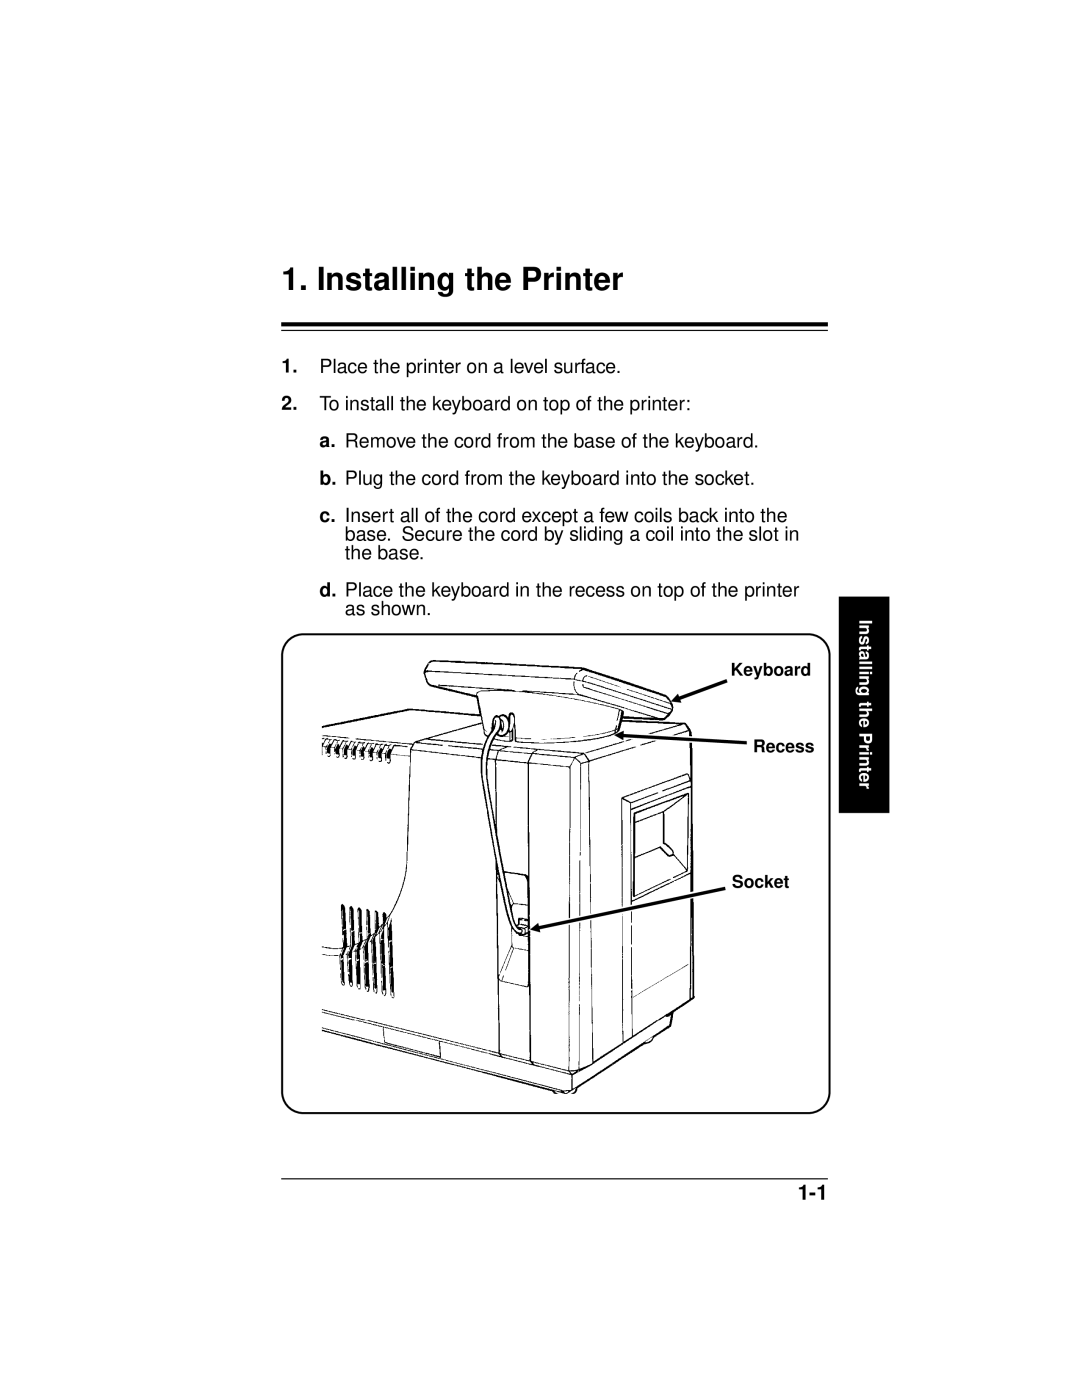 Paxar 9445 manual Installing the Printer 